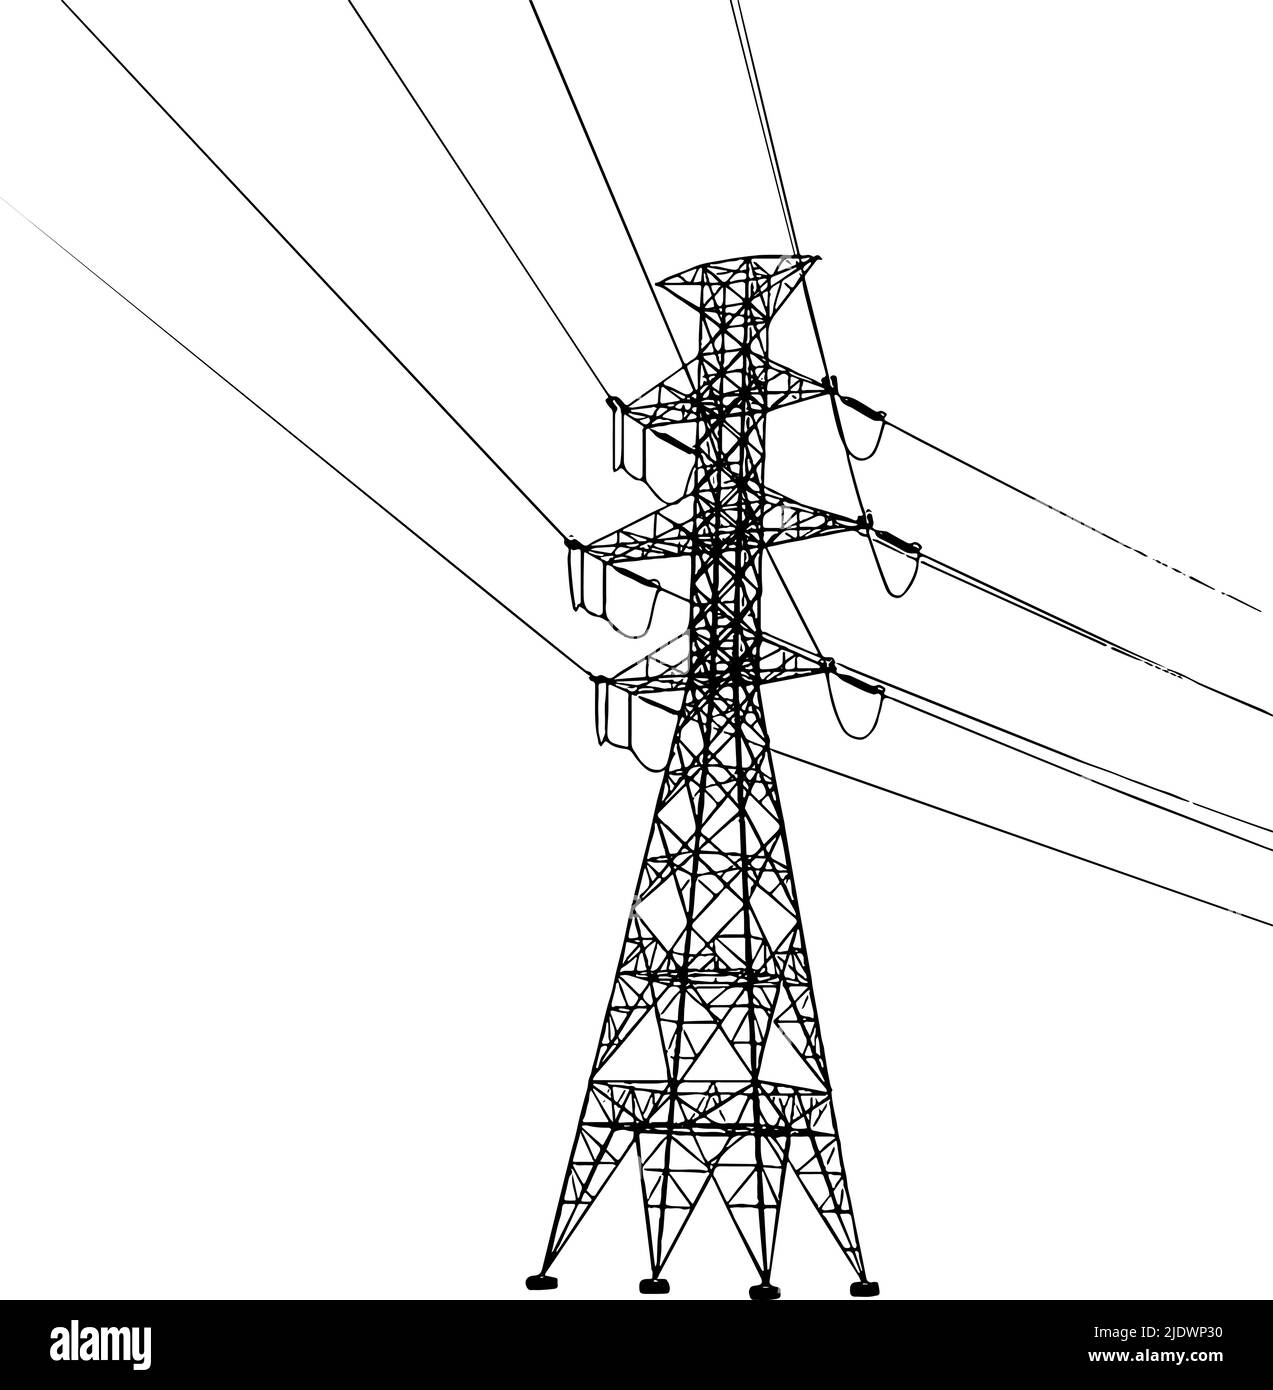 Power Lines illustration Stock Vector